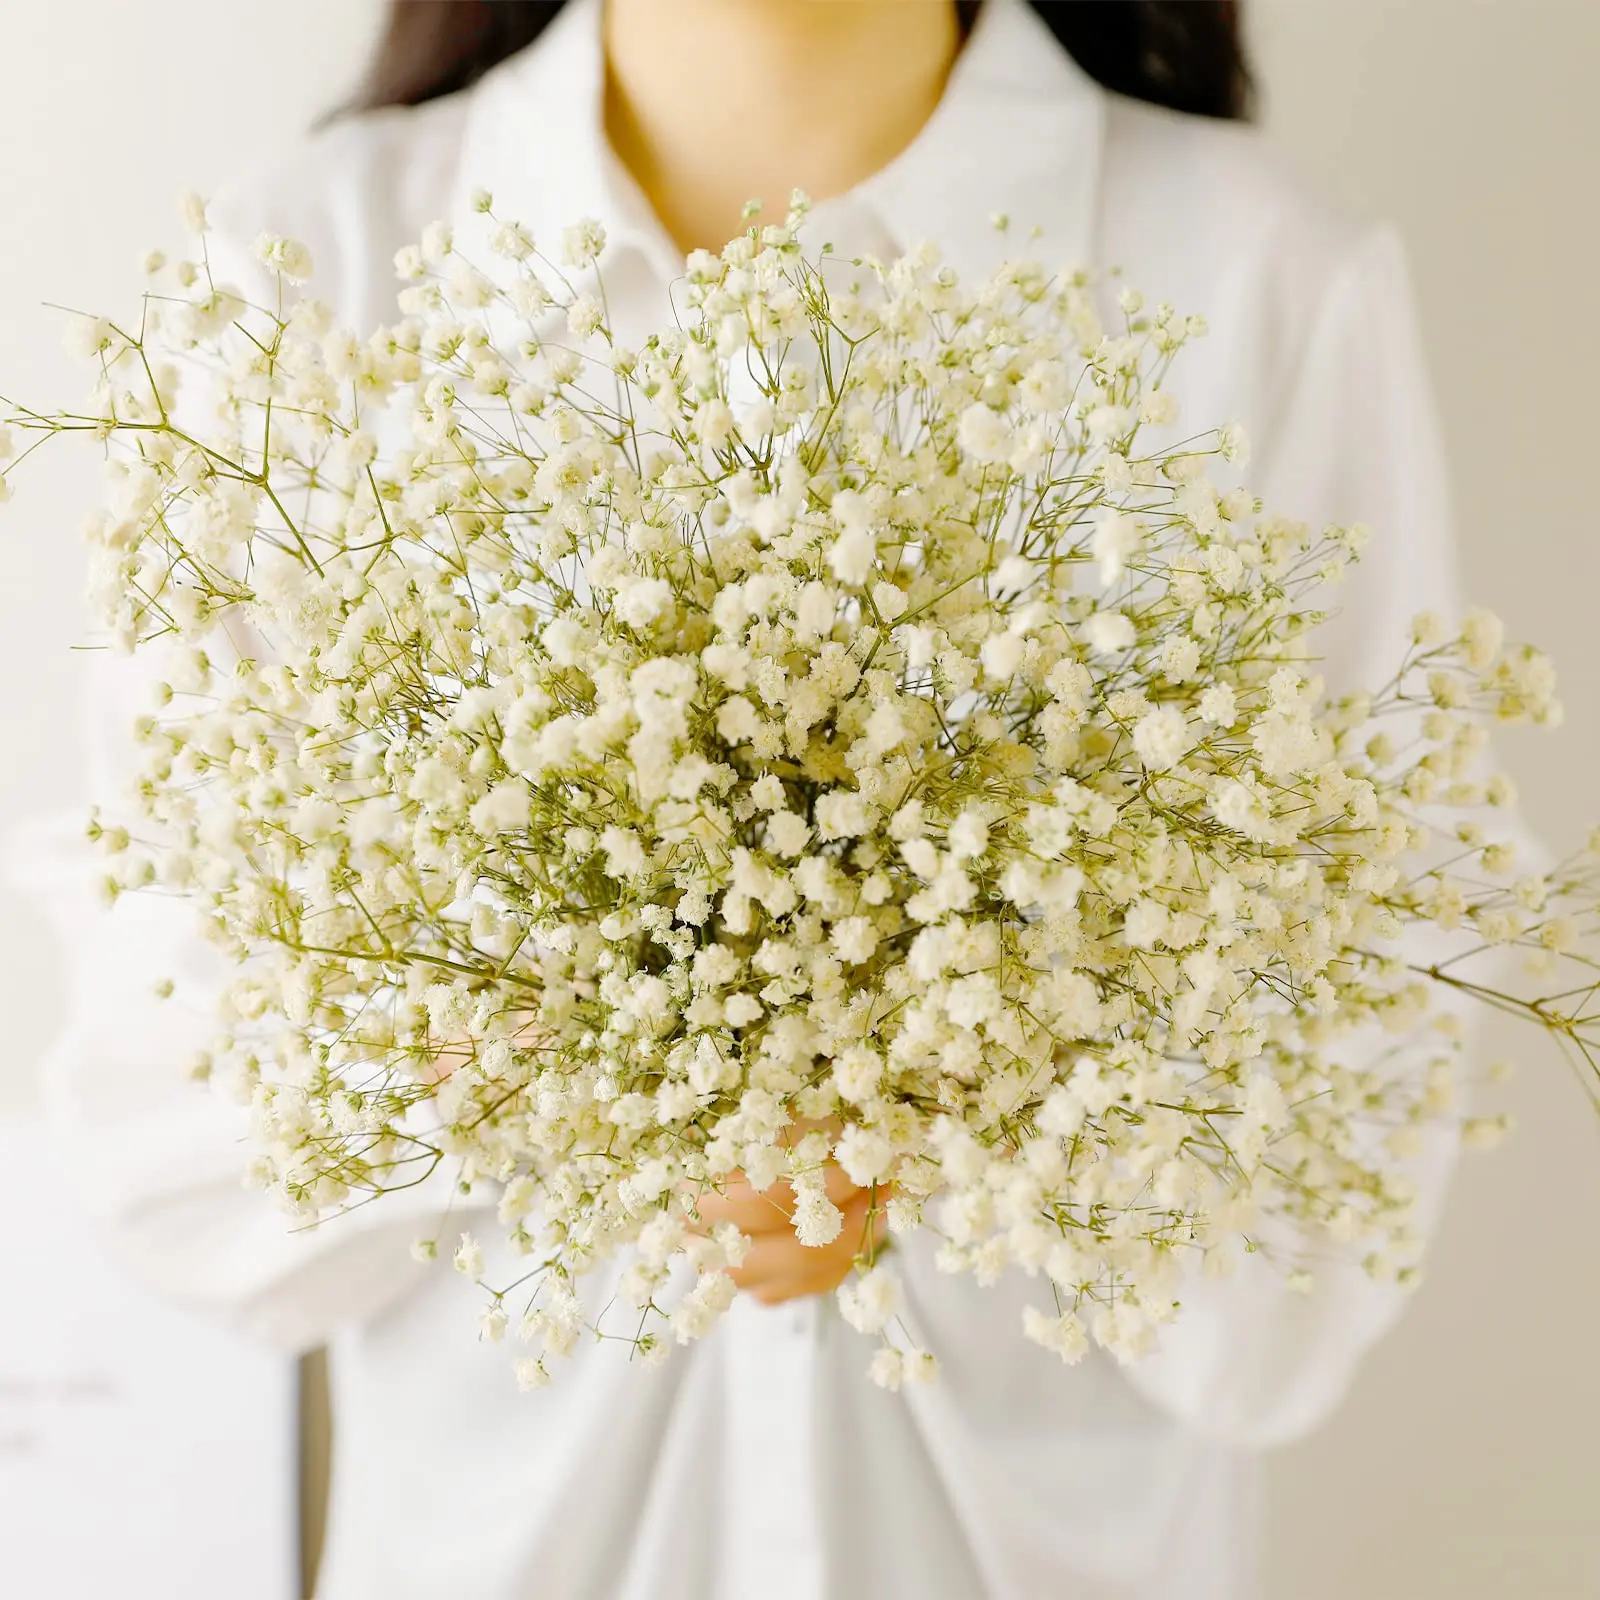 

100g Natural Dried Flowers Babys Breath White Bundles Gypsophila Bouquet for Wedding DIY Arrangements Home Decoration Table Vase